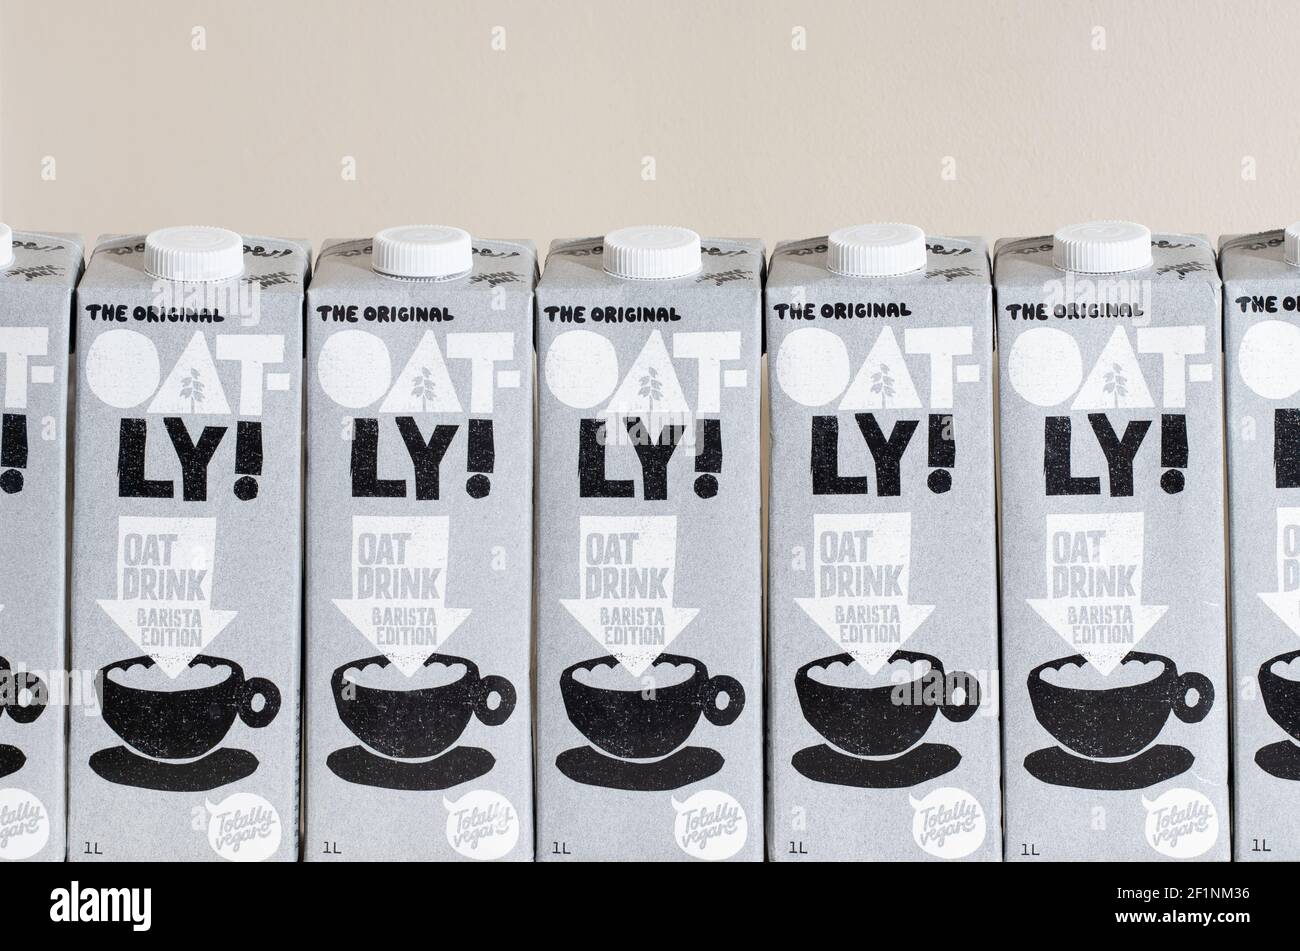 Londra / UK - 8 marzo 2021 - cartoni per latte Oatly di fila. Oatly è un'alternativa di latte vegan senza latte. Foto Stock